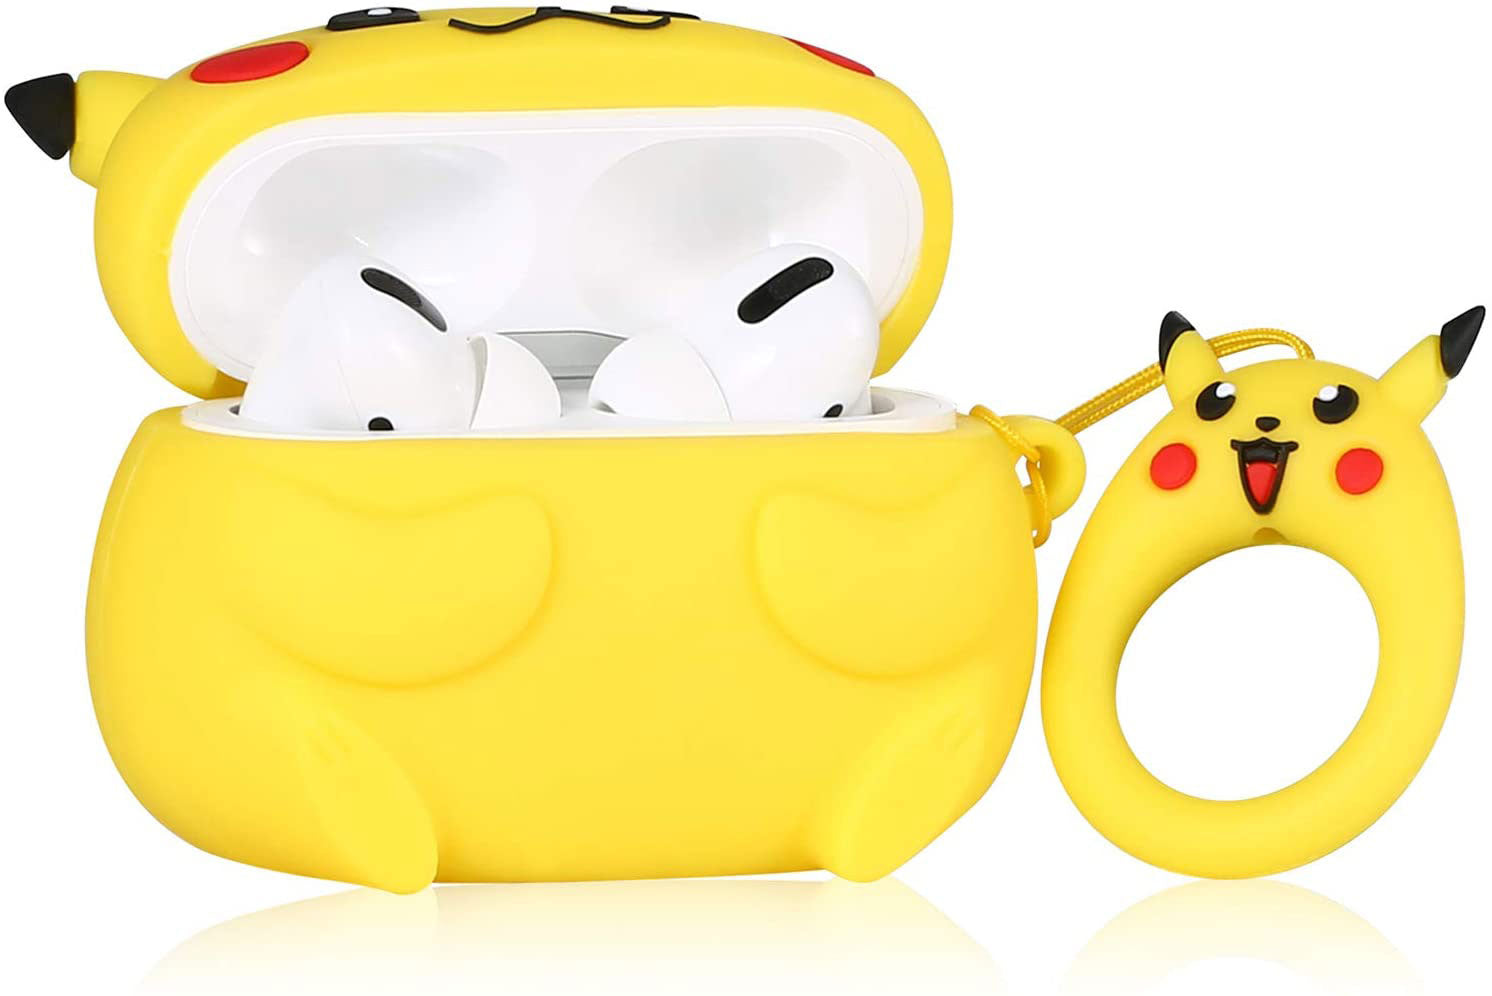 Pikachu Pokemon Airpods Pro Case - 0